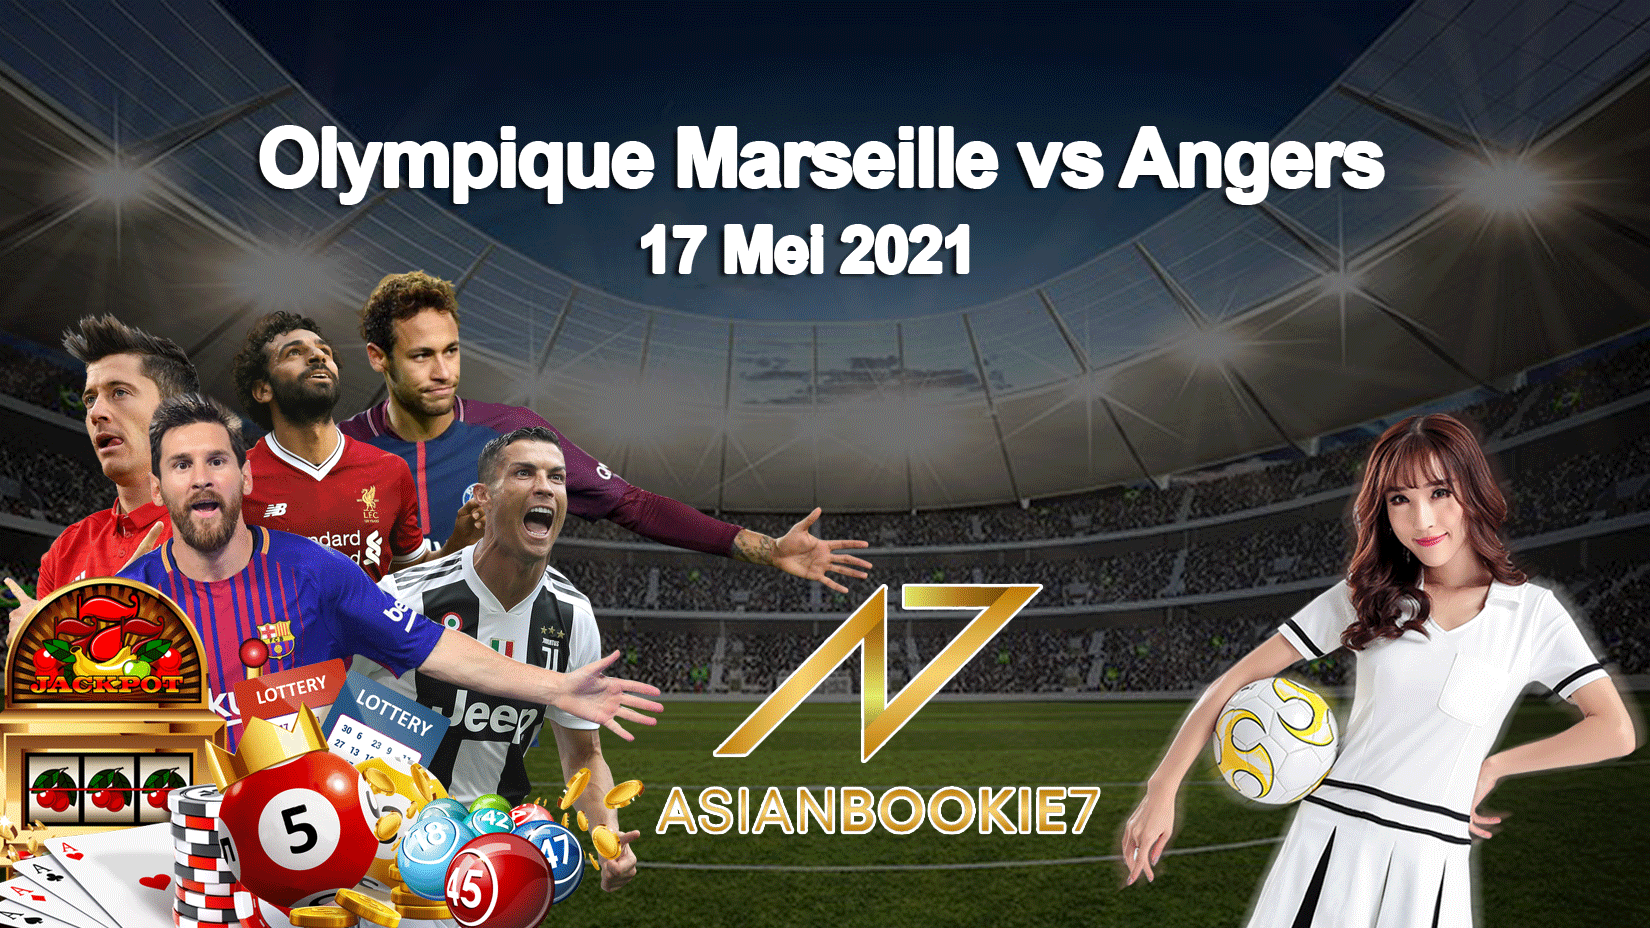 Prediksi Olympique Marseille vs Angers 17 Mei 2021